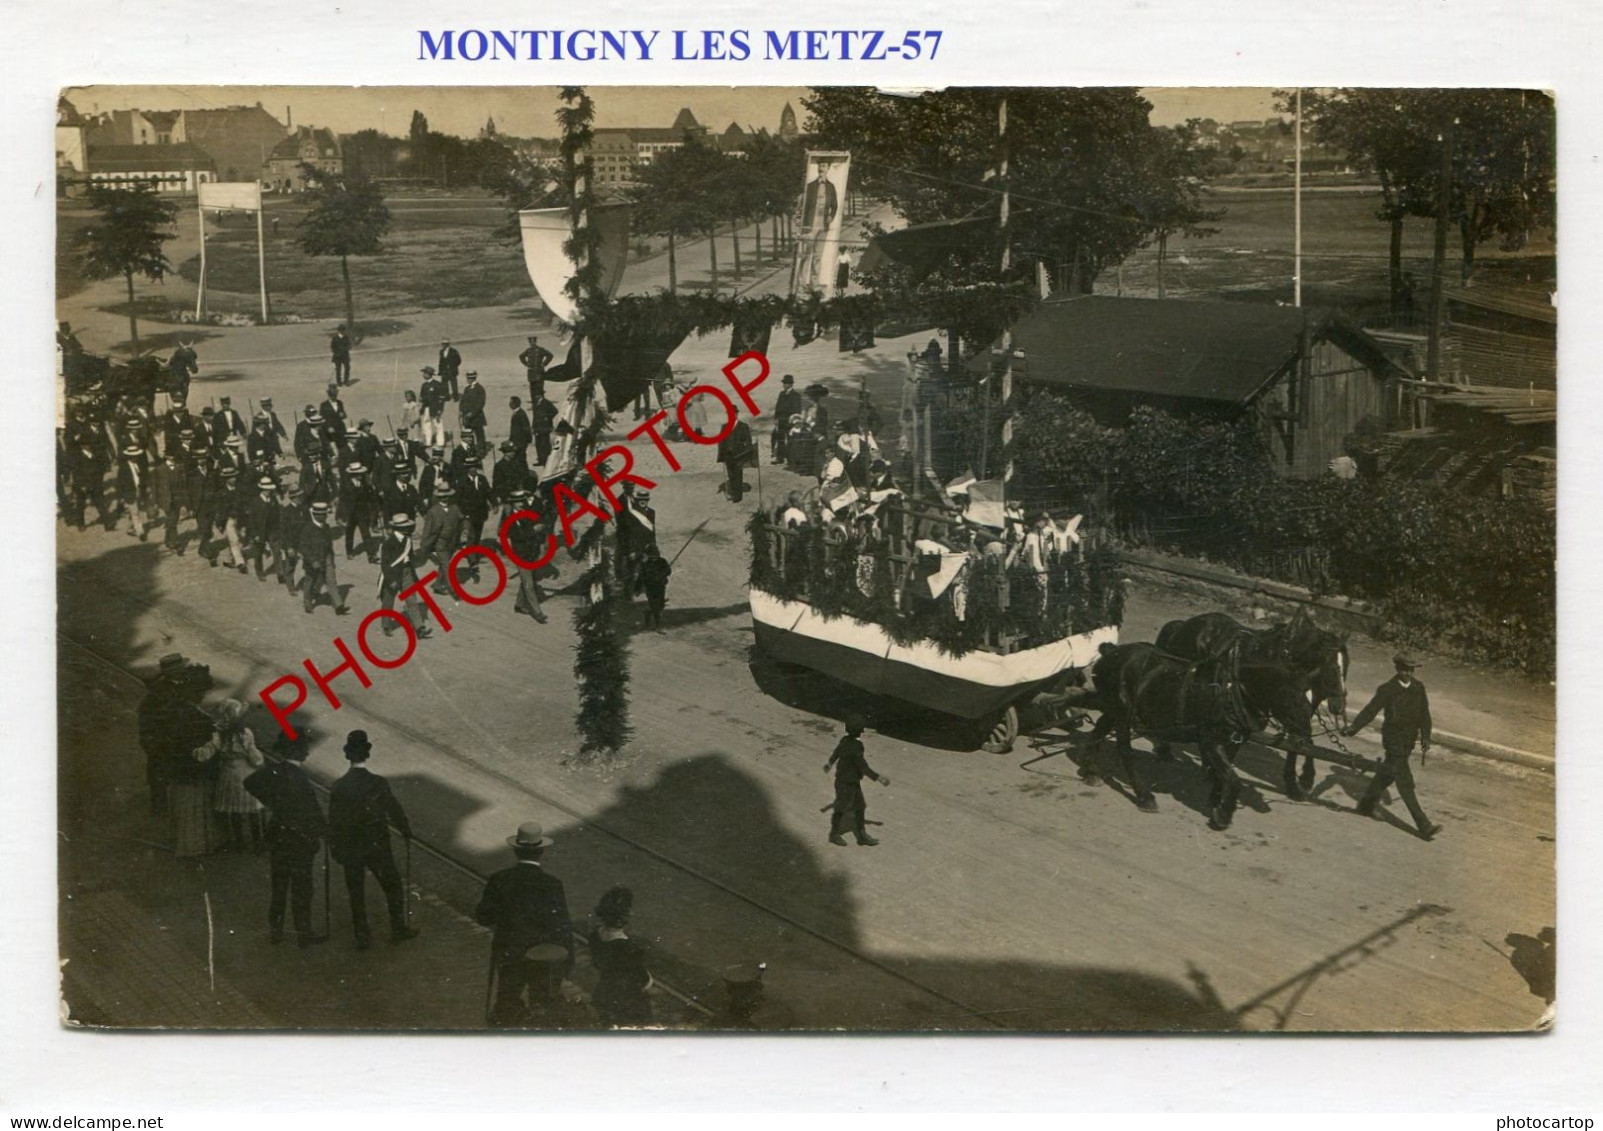 MONTIGNY LES METZ-57-CHAR-Defile-1912-CARTE PHOTO Allemande-FRANCE-MILITARIA- - Metz Campagne